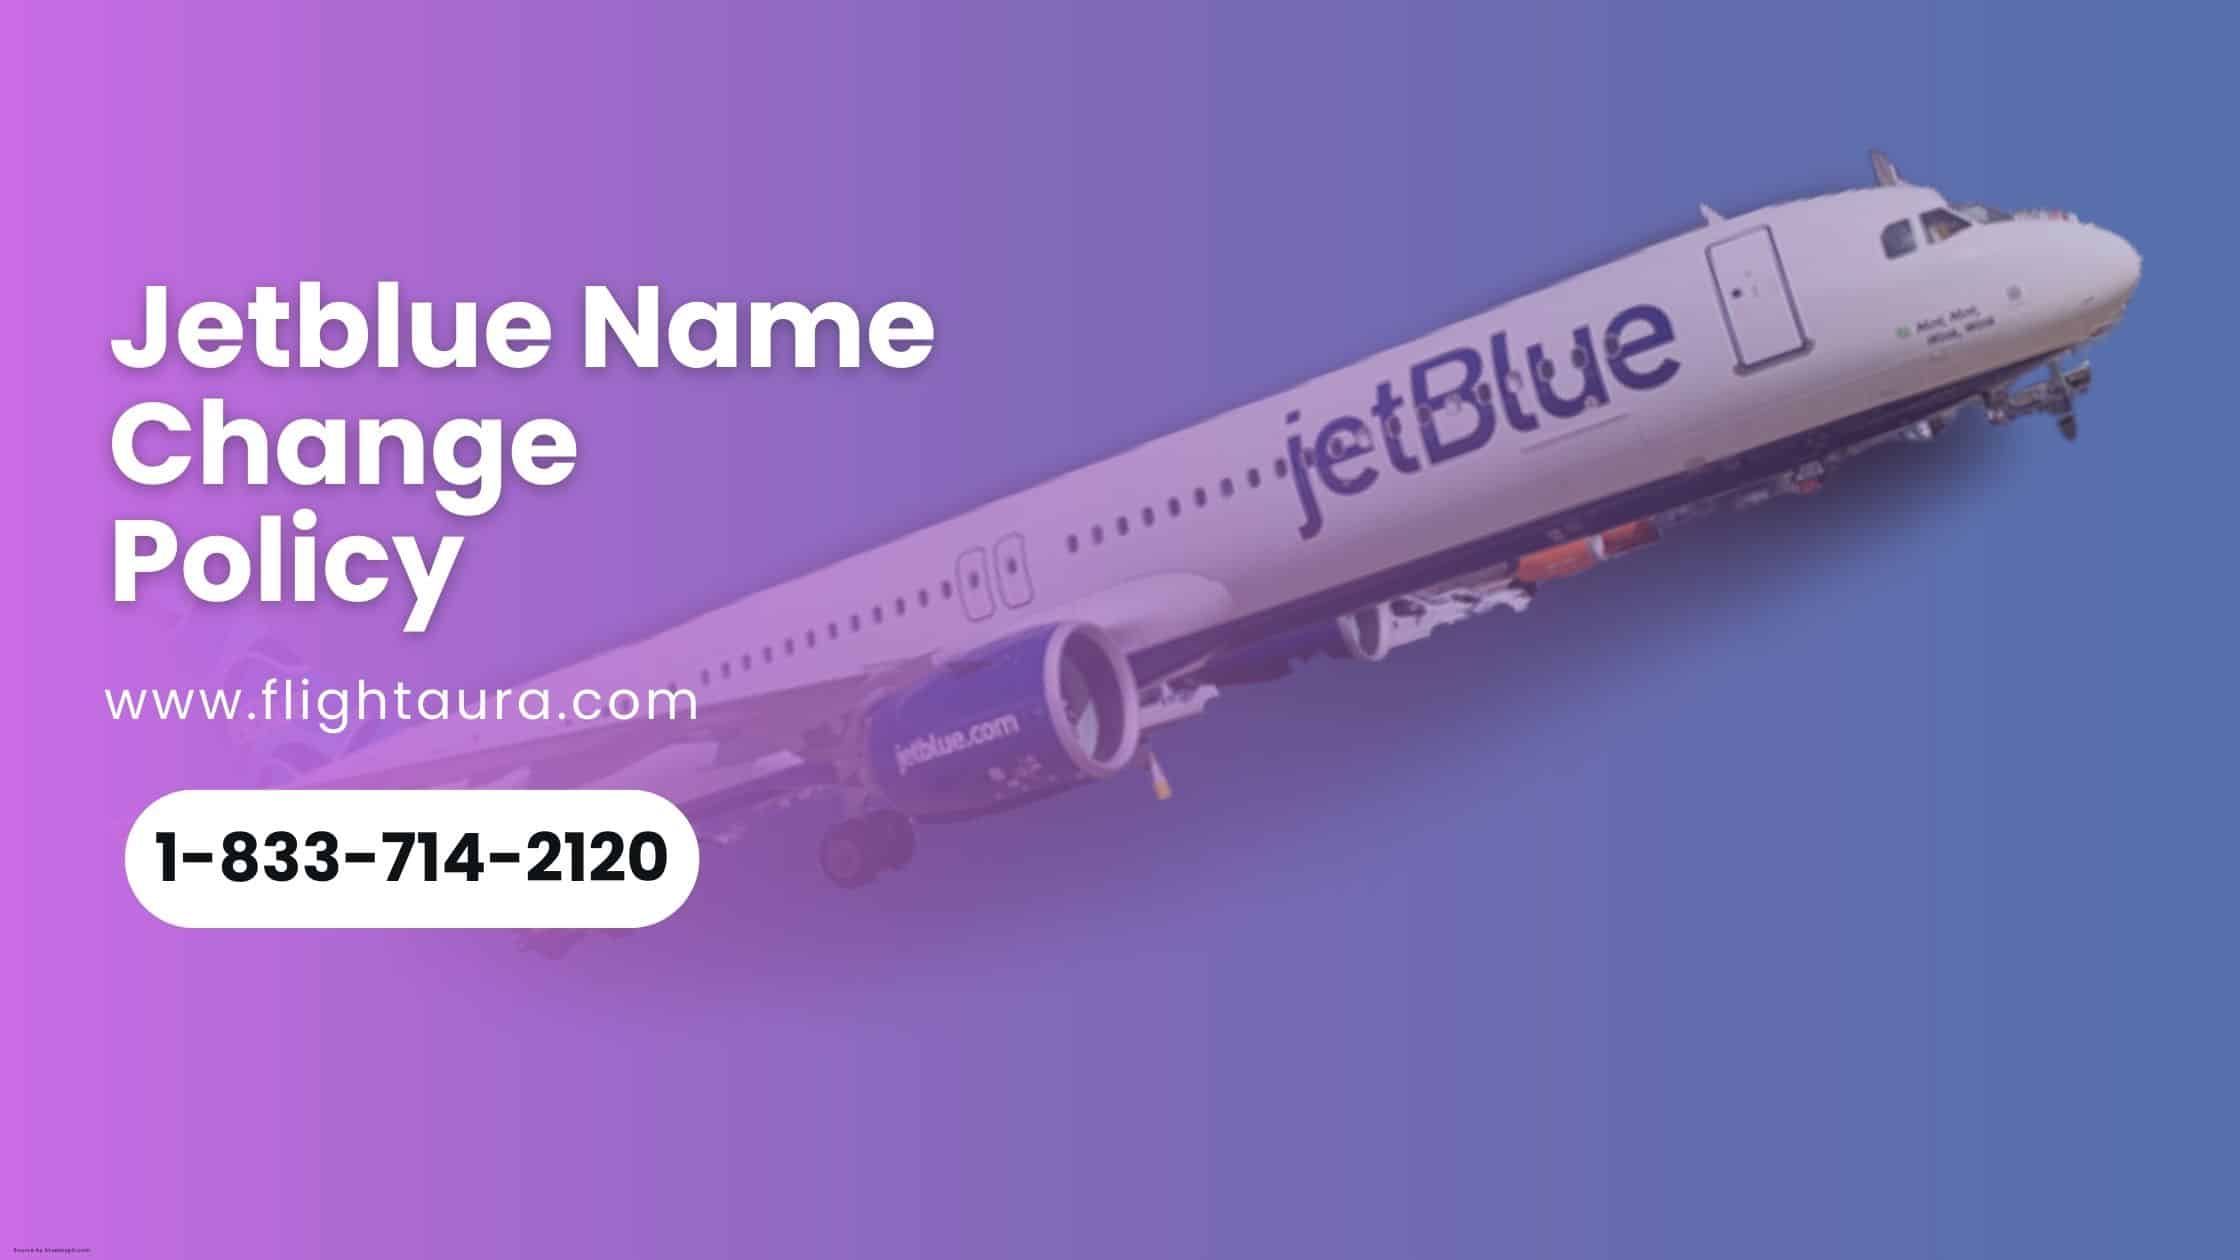 Jetblue Name Change Policy